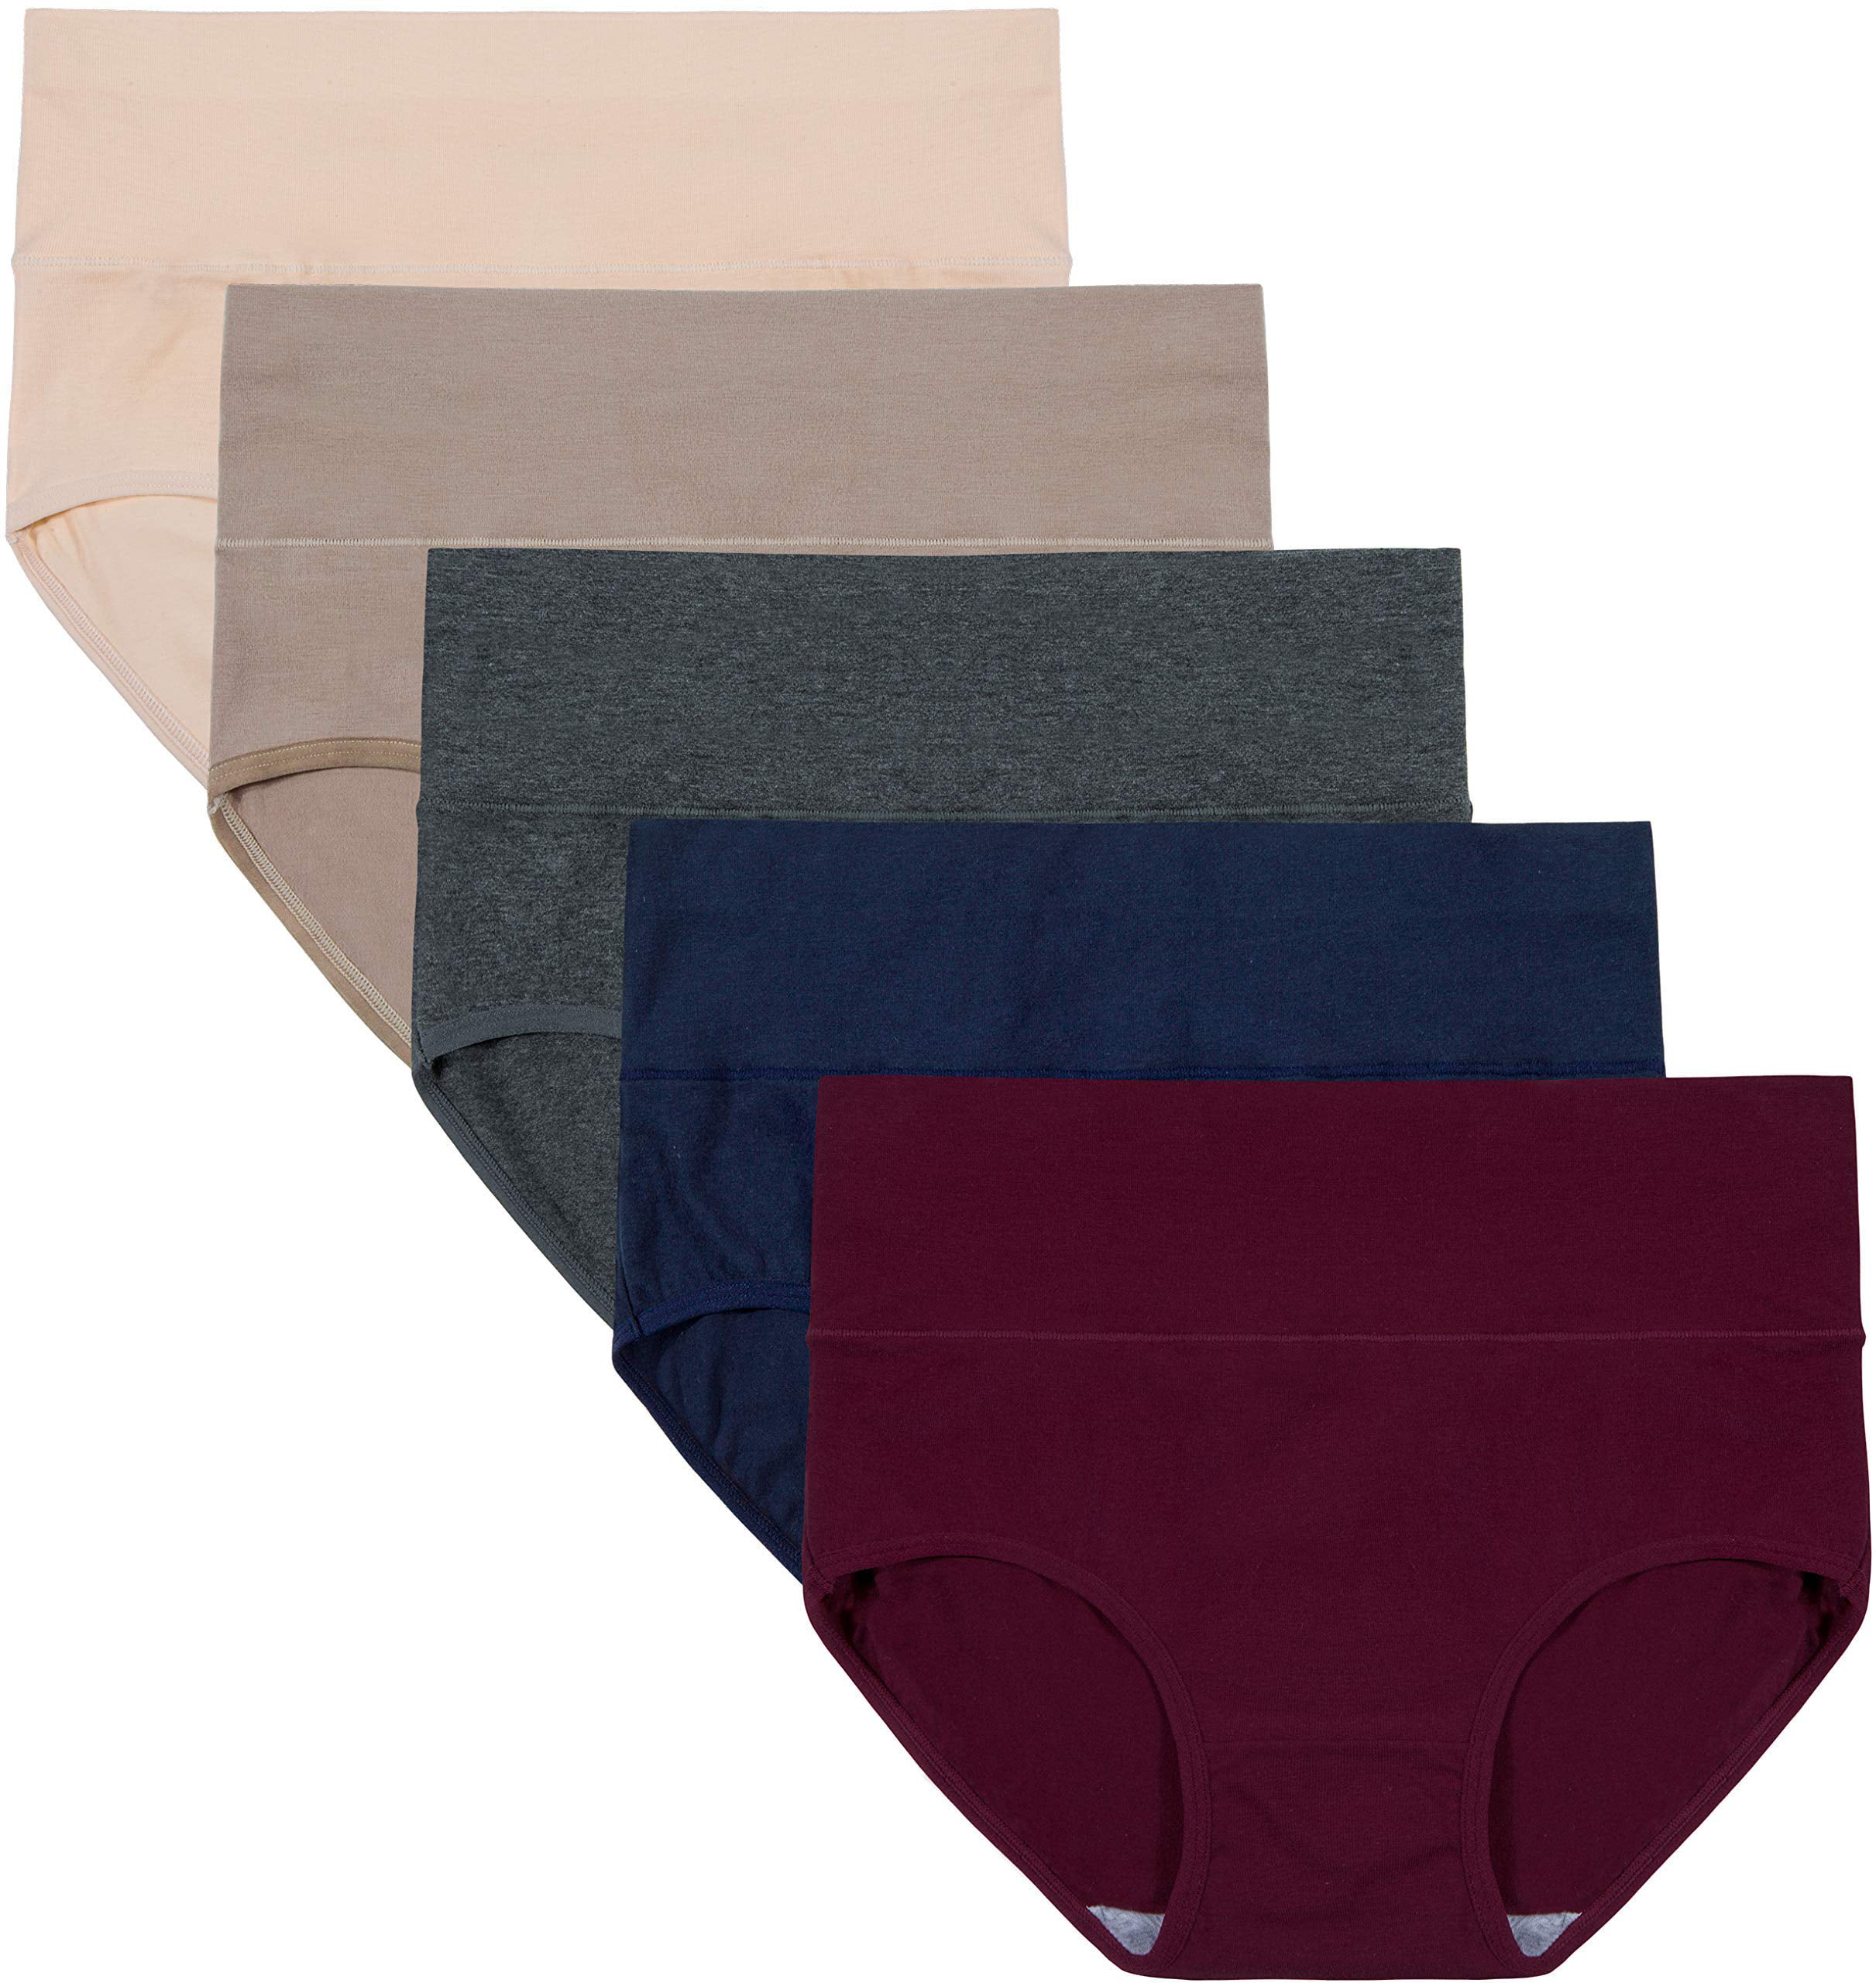 INNERSY Womens Underwear Cotton Briefs Postpartum High Waisted Panties Multi Pack 